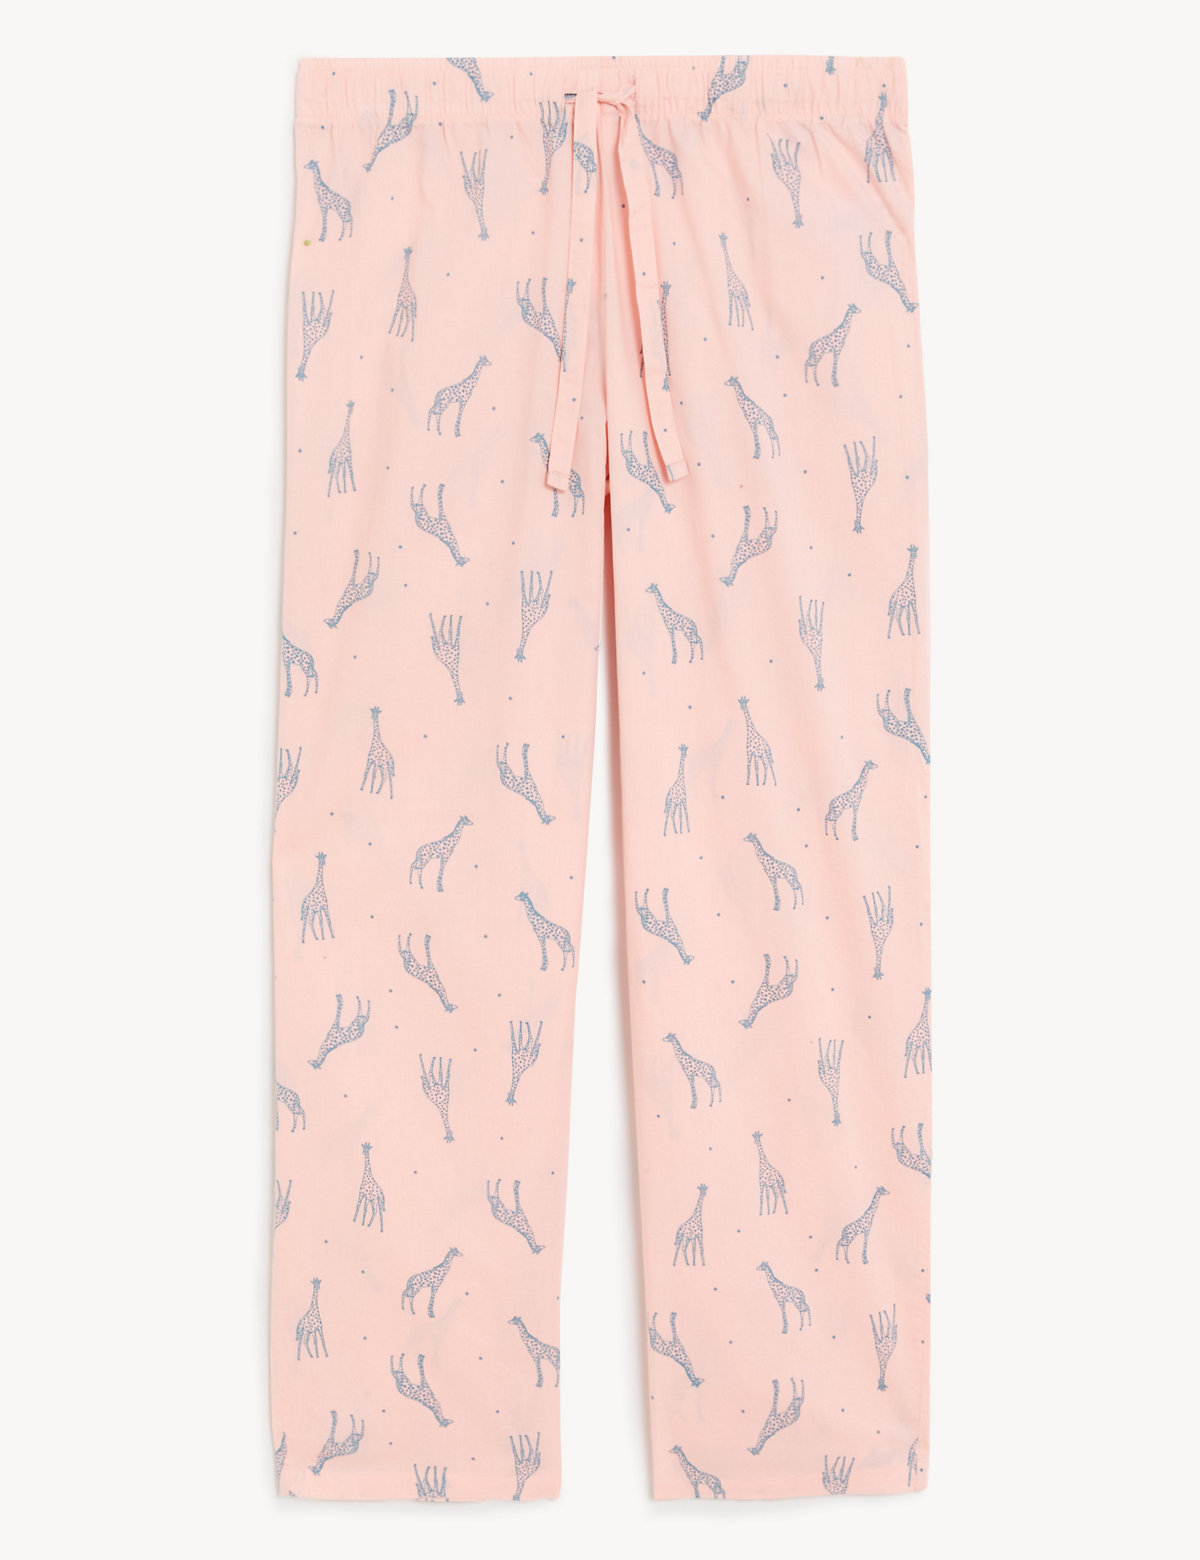 Pure Cotton Giraffe Print Pyjama Bottoms